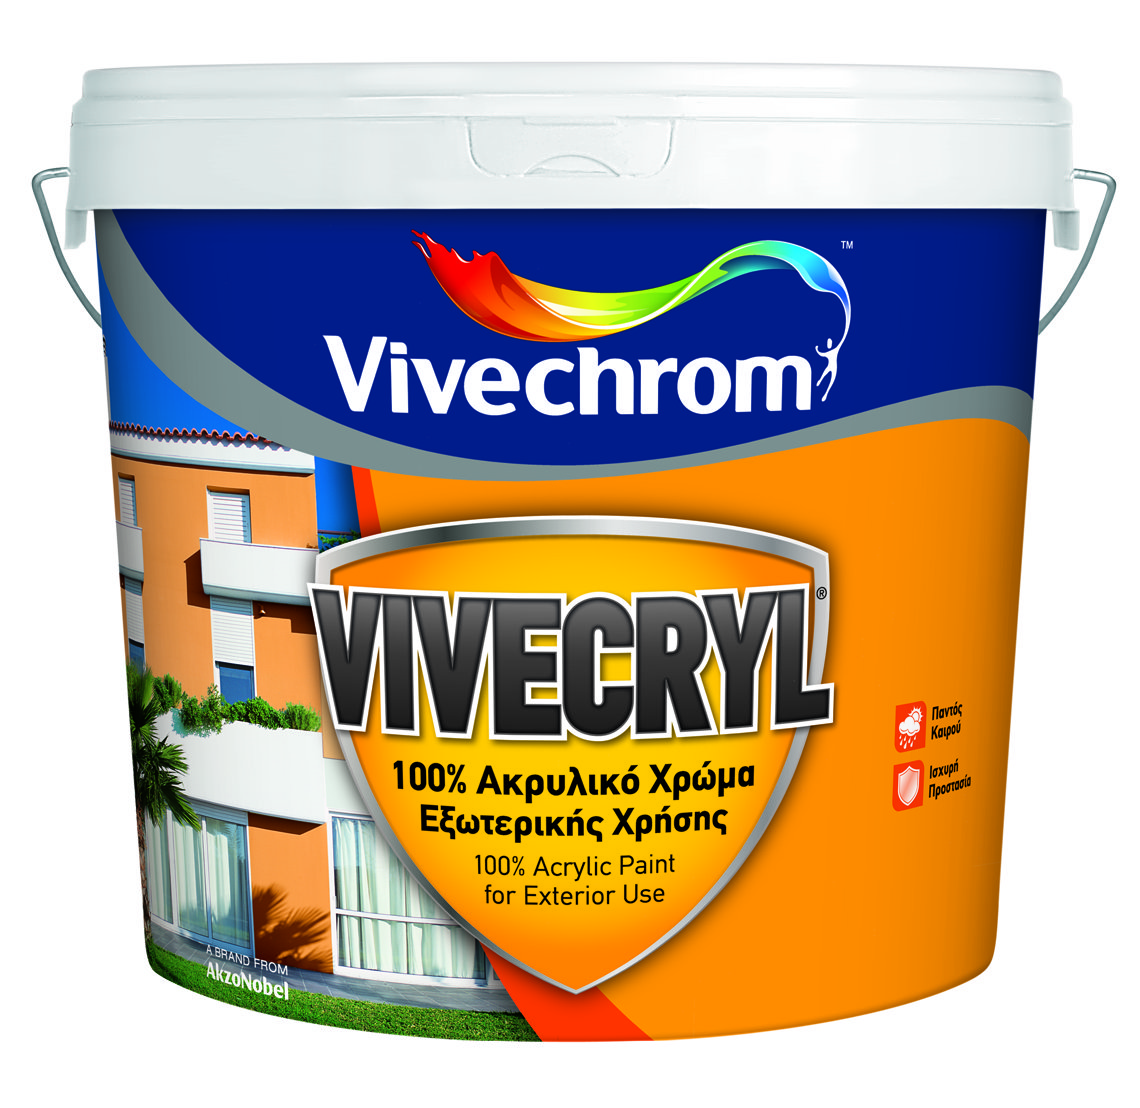 Vivechrom Vivecryl Ακρυλικό Οικολογικό Χρώμα Matt Finish Λευκό 750ml